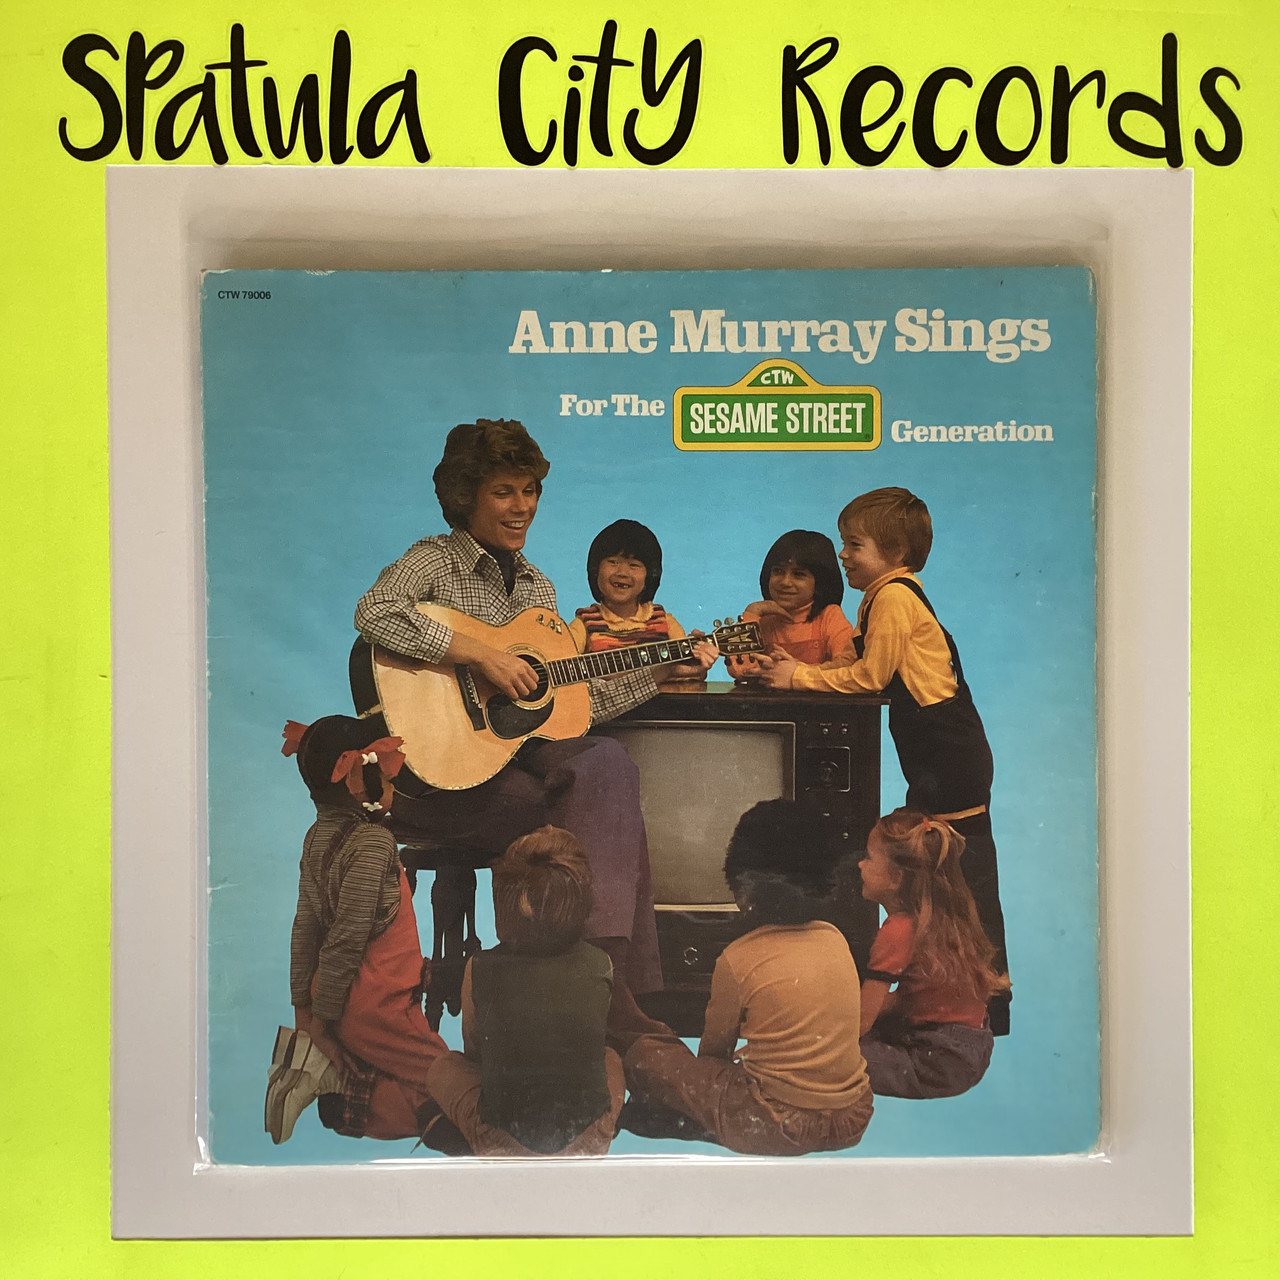 Anne Murray - Anne Murray Sings for the Sesame Street Generation - vinyl record album LP